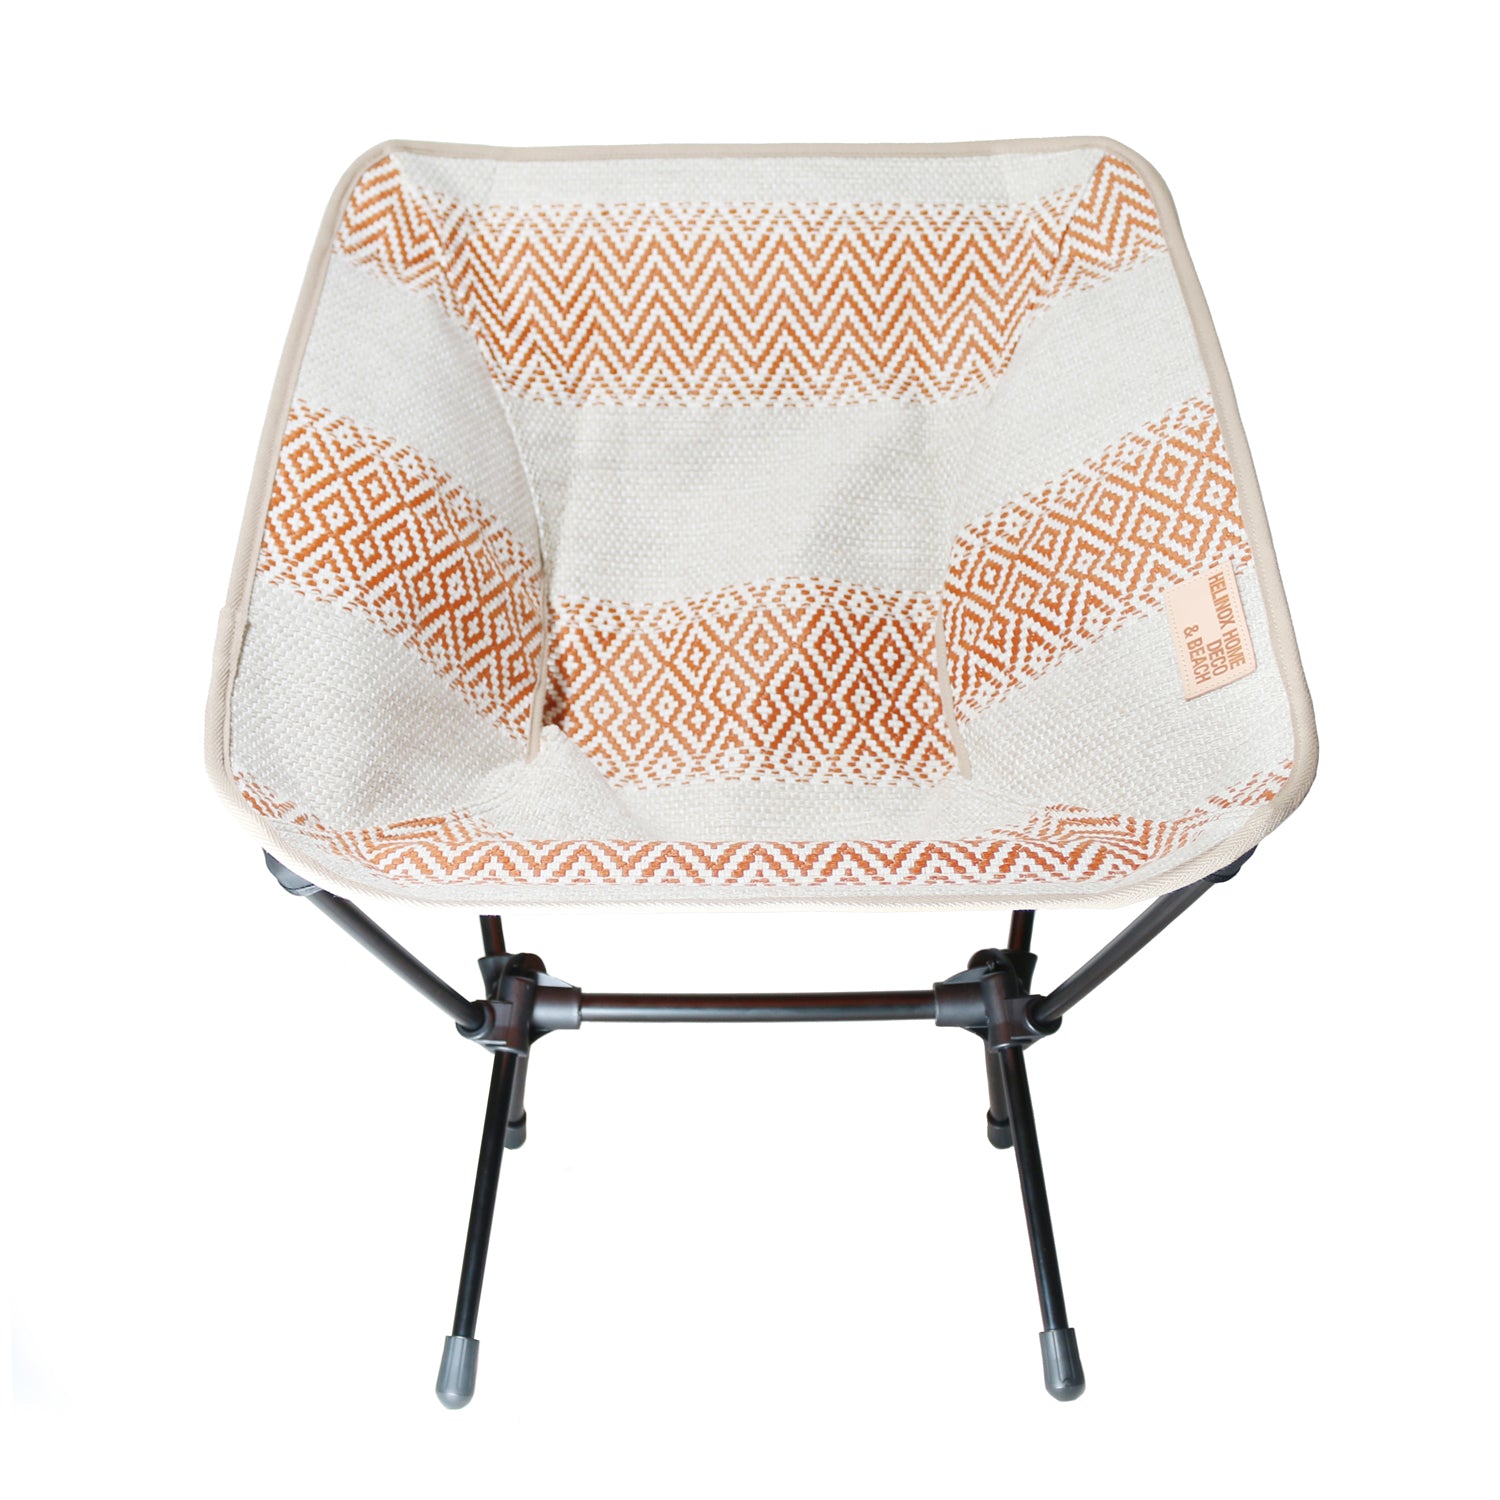 CUB111 Helinox comfort chair